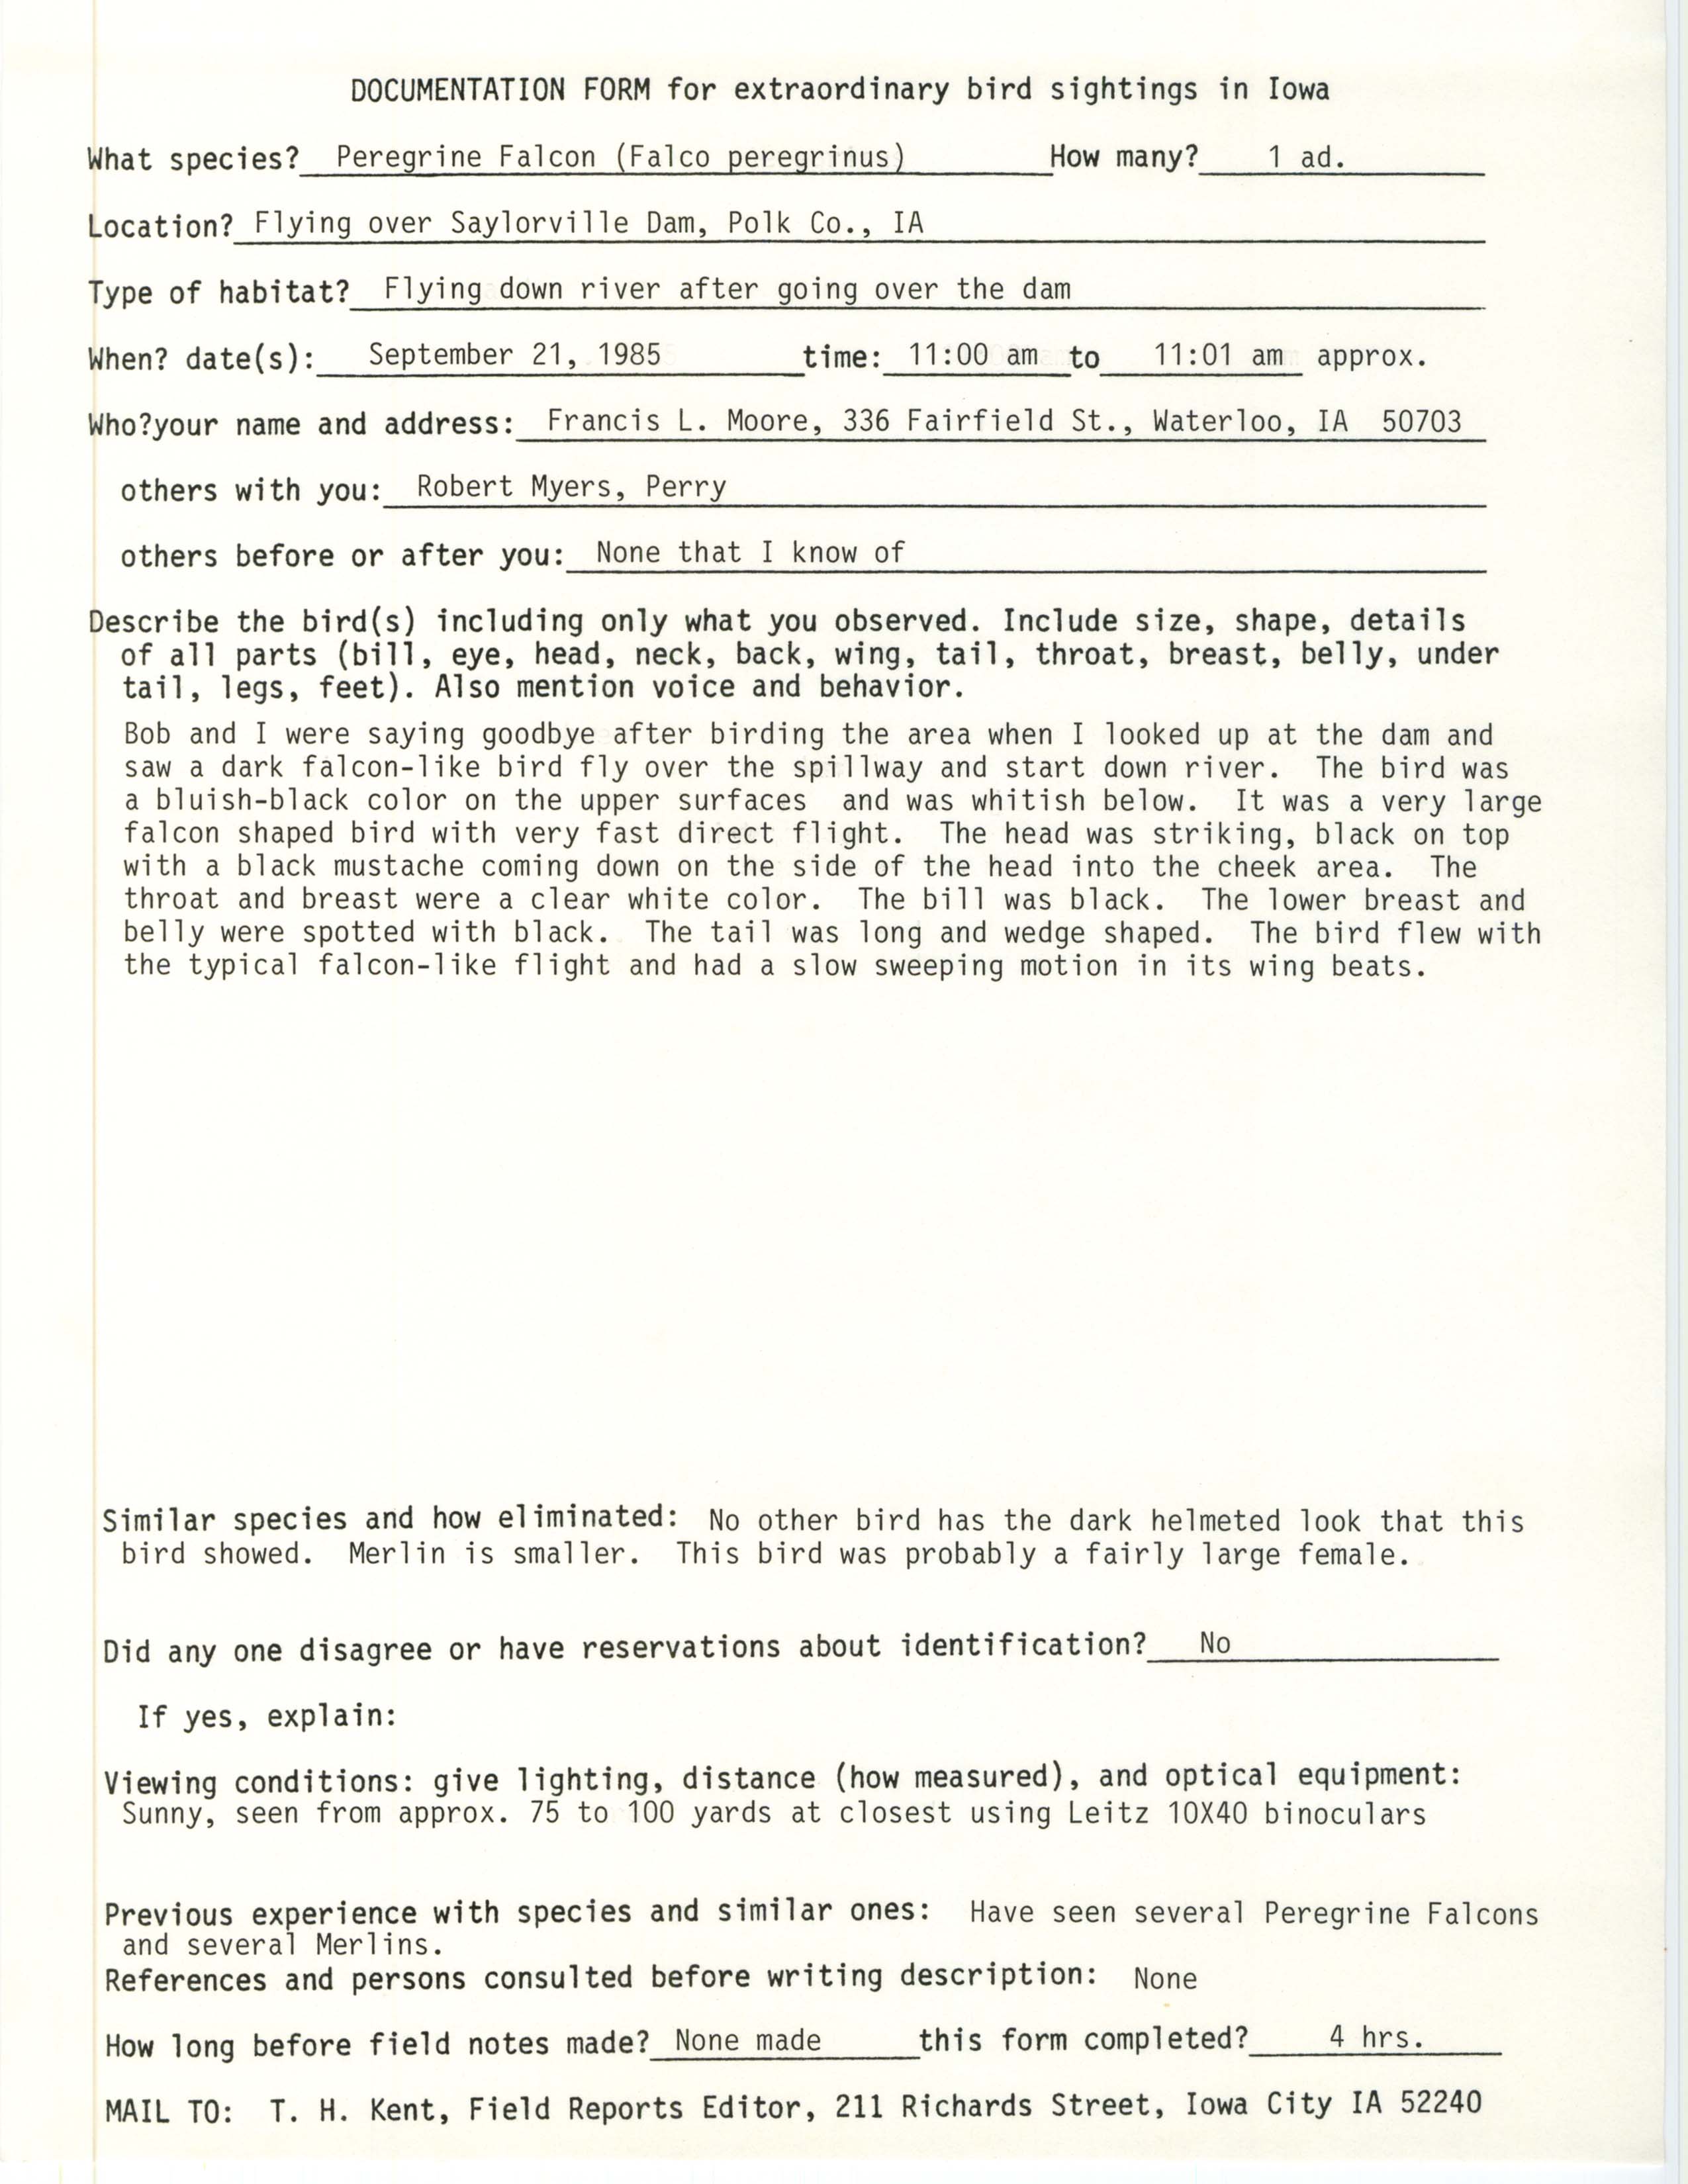 Rare bird documentation form for Peregrine Falcon at Saylorville Dam, 1985